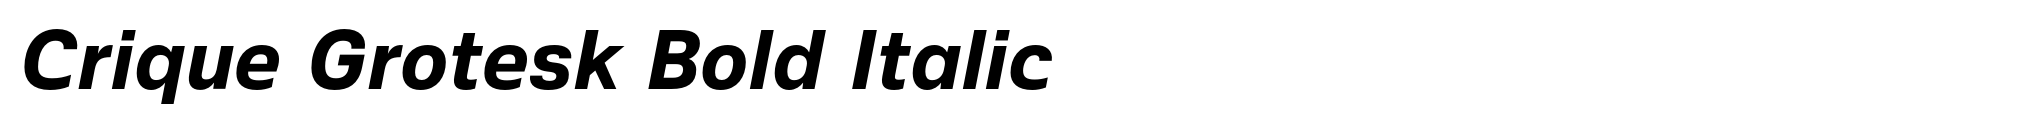 Crique Grotesk Bold Italic image